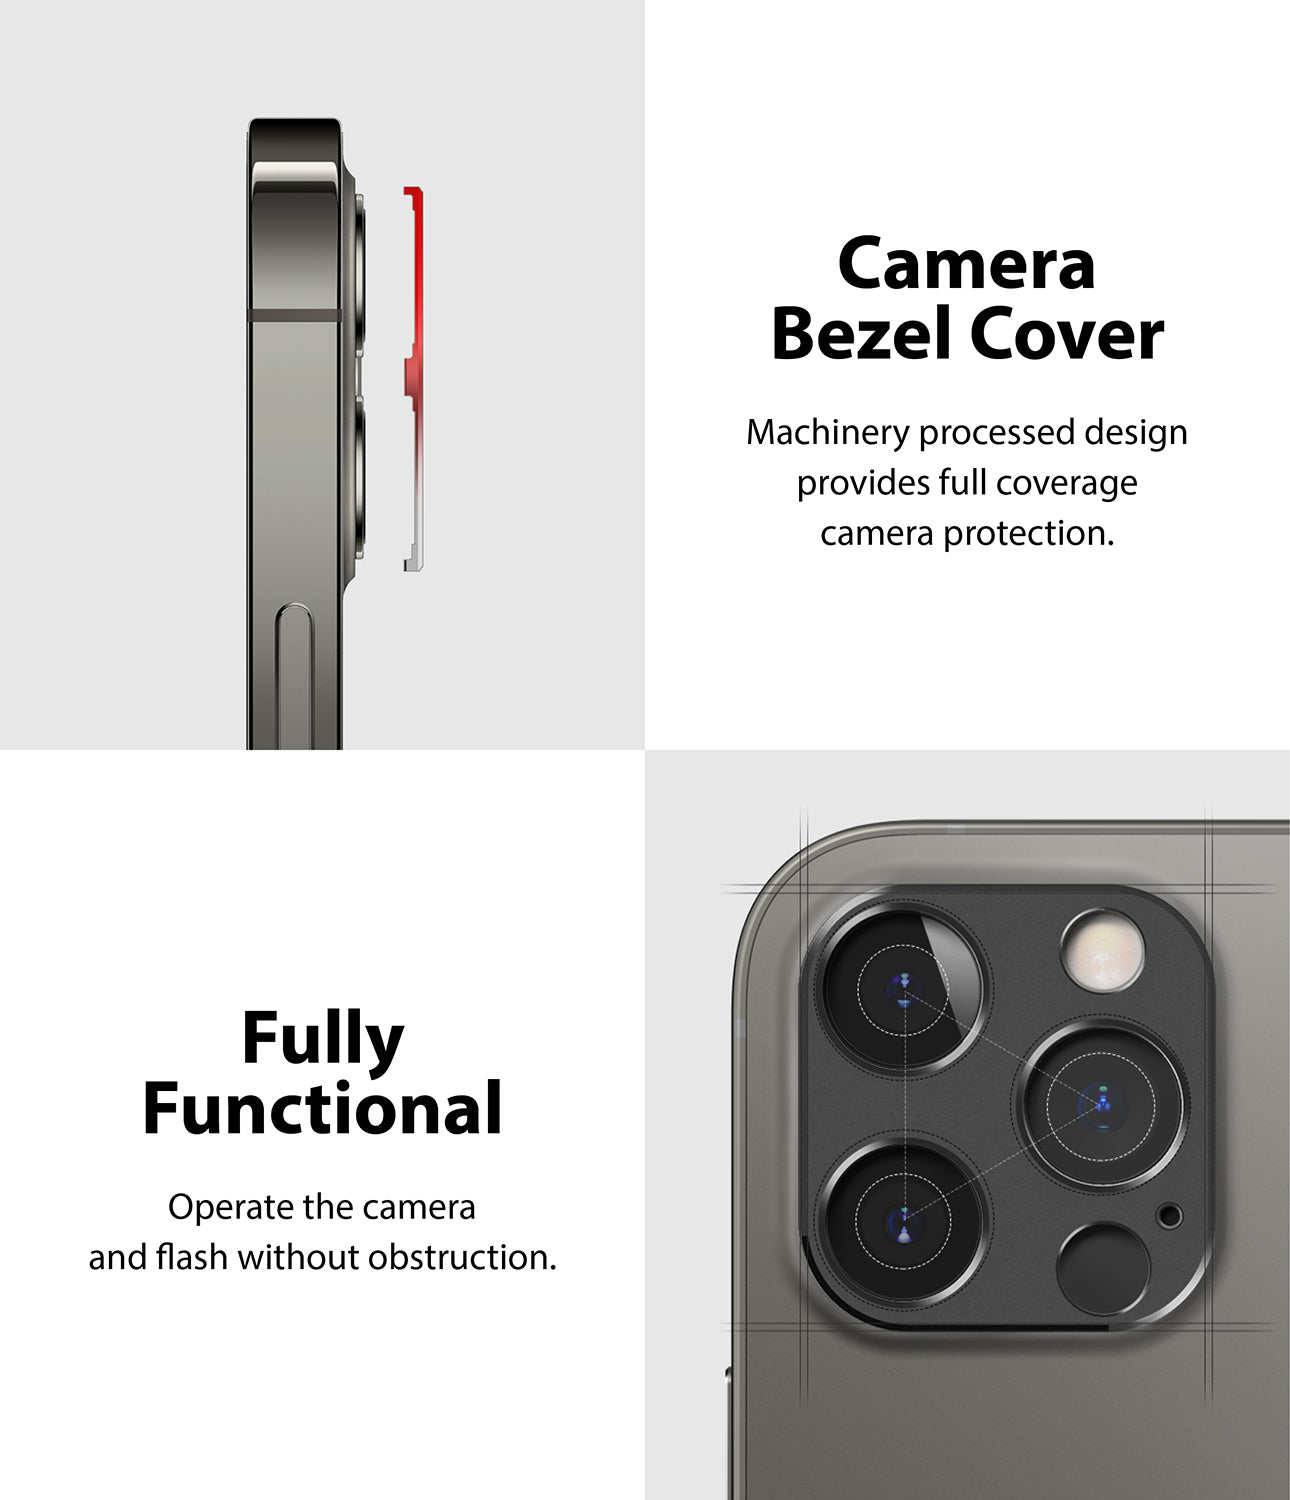 iPhone 12 Pro Max | Camera Styling